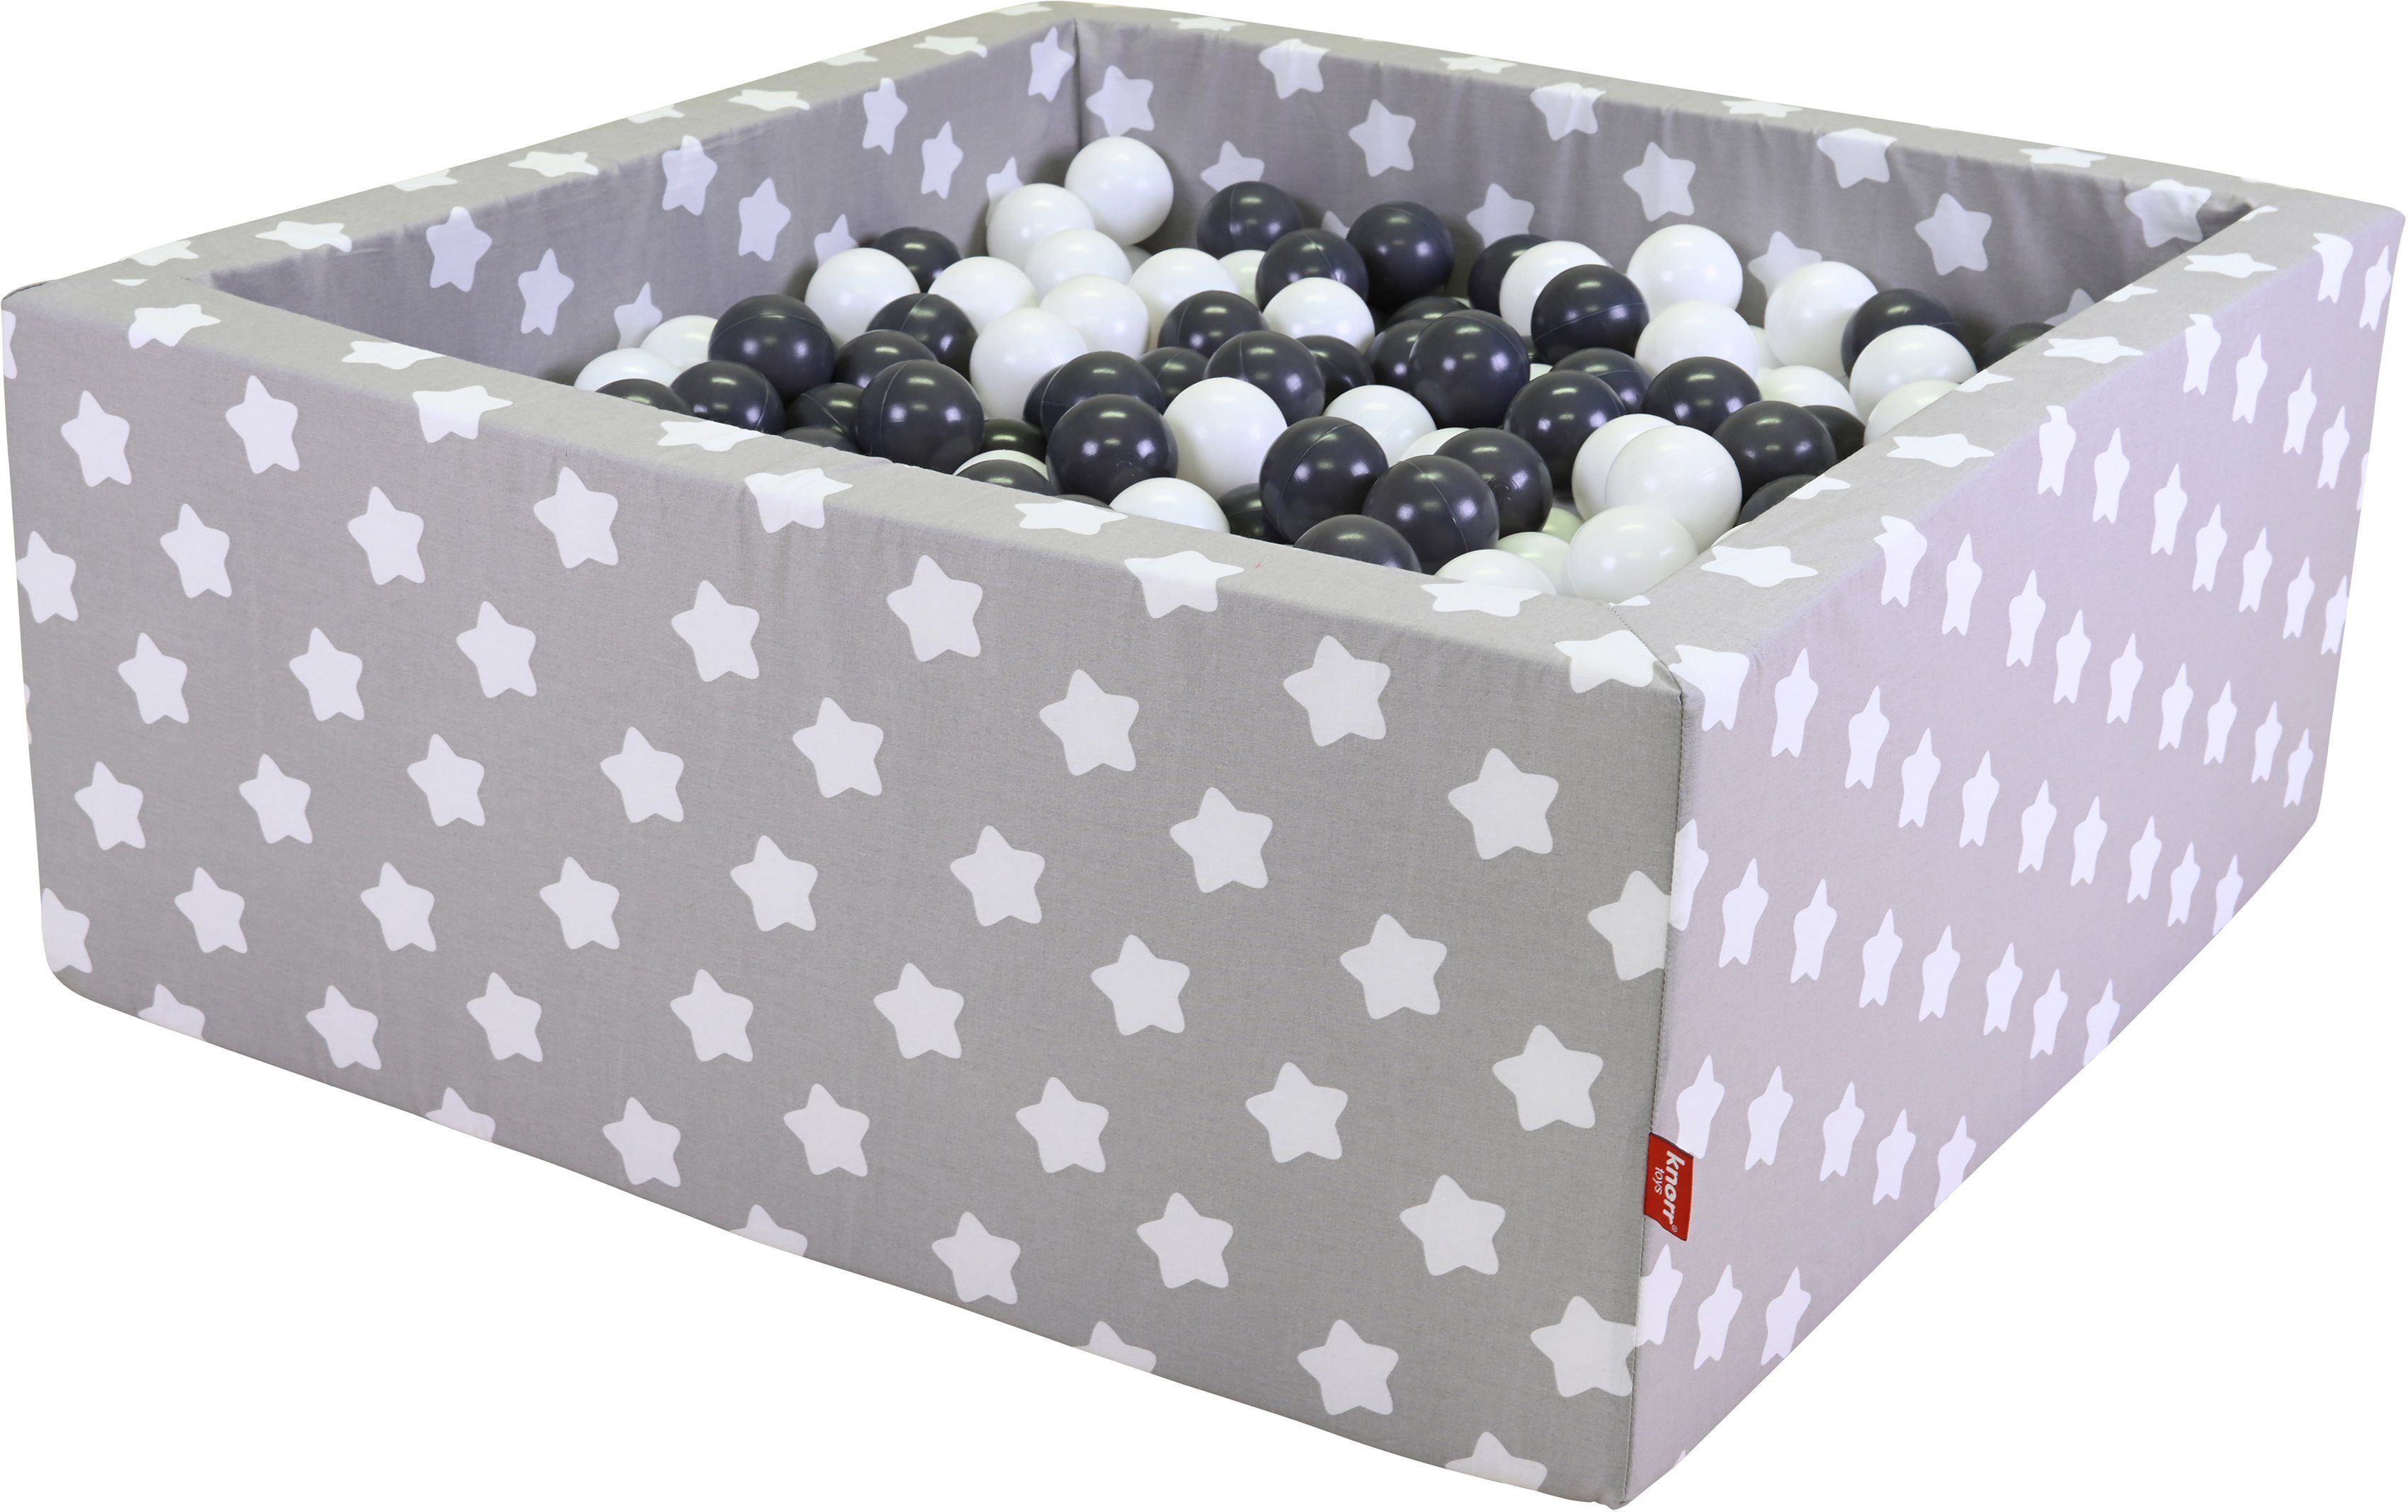 Knorrtoys® Ballenbak Soft, Grey white stars hoekig met 100 ballen grijs/crème, made in europe